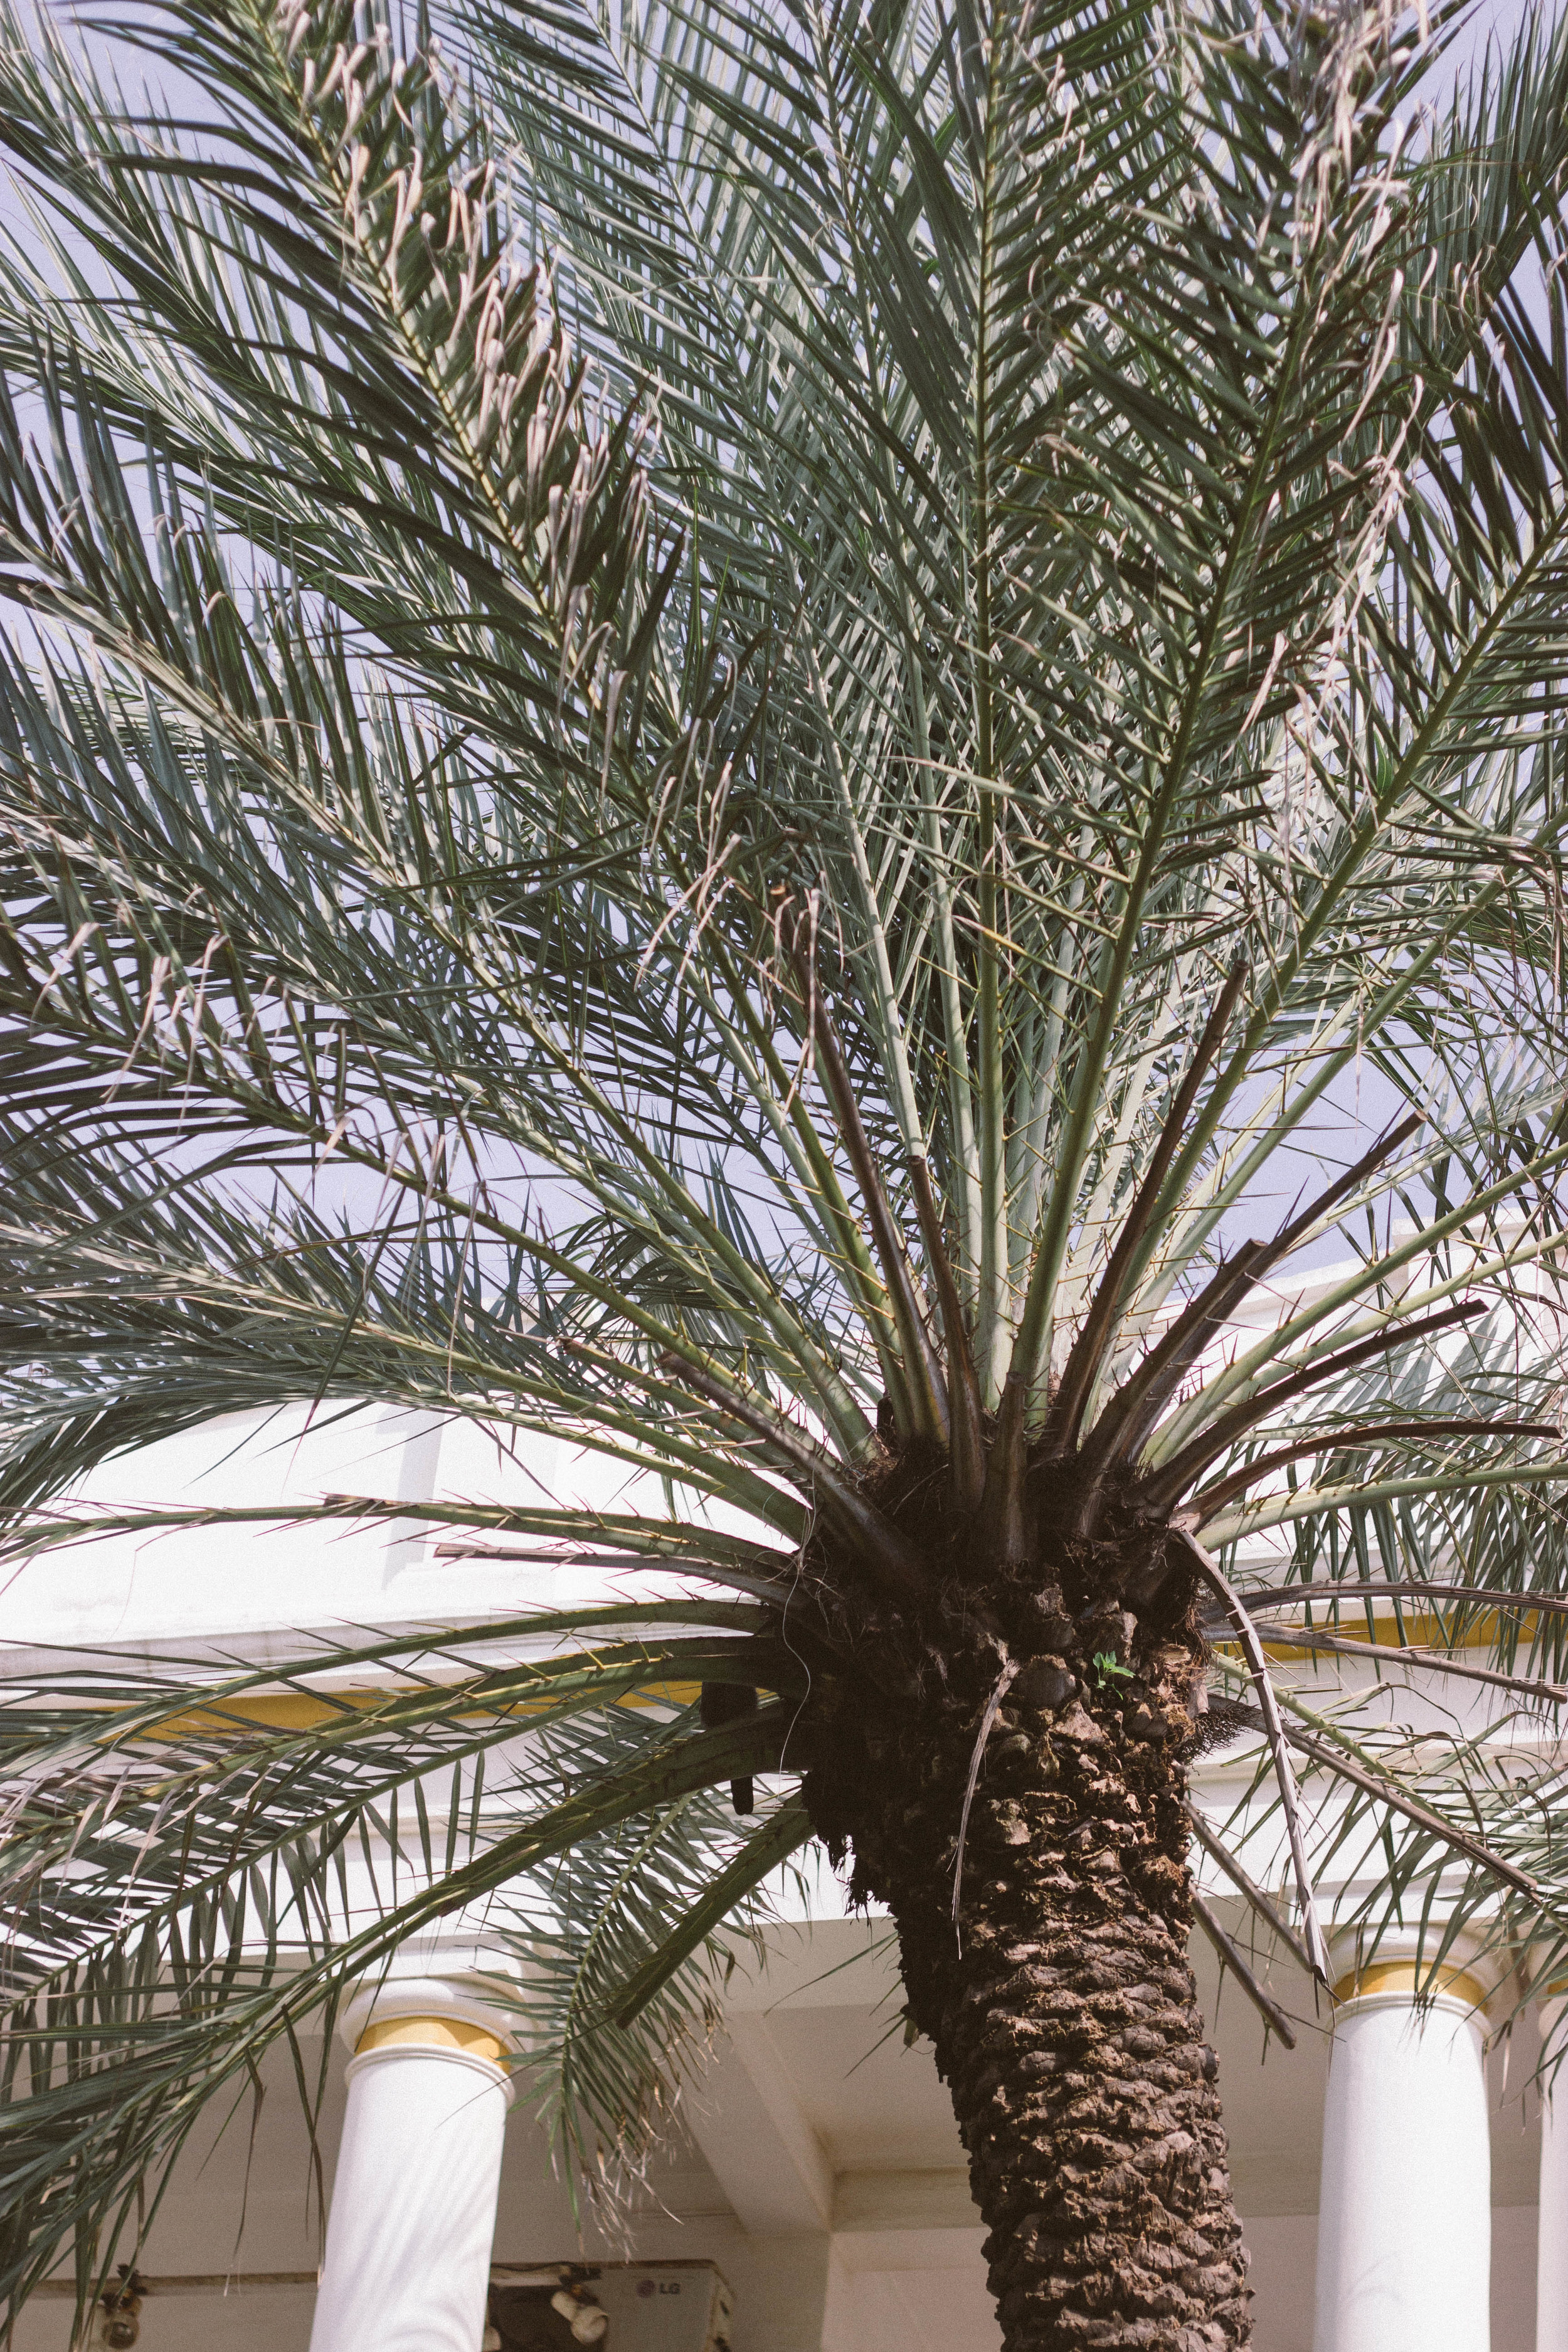 palm tree india